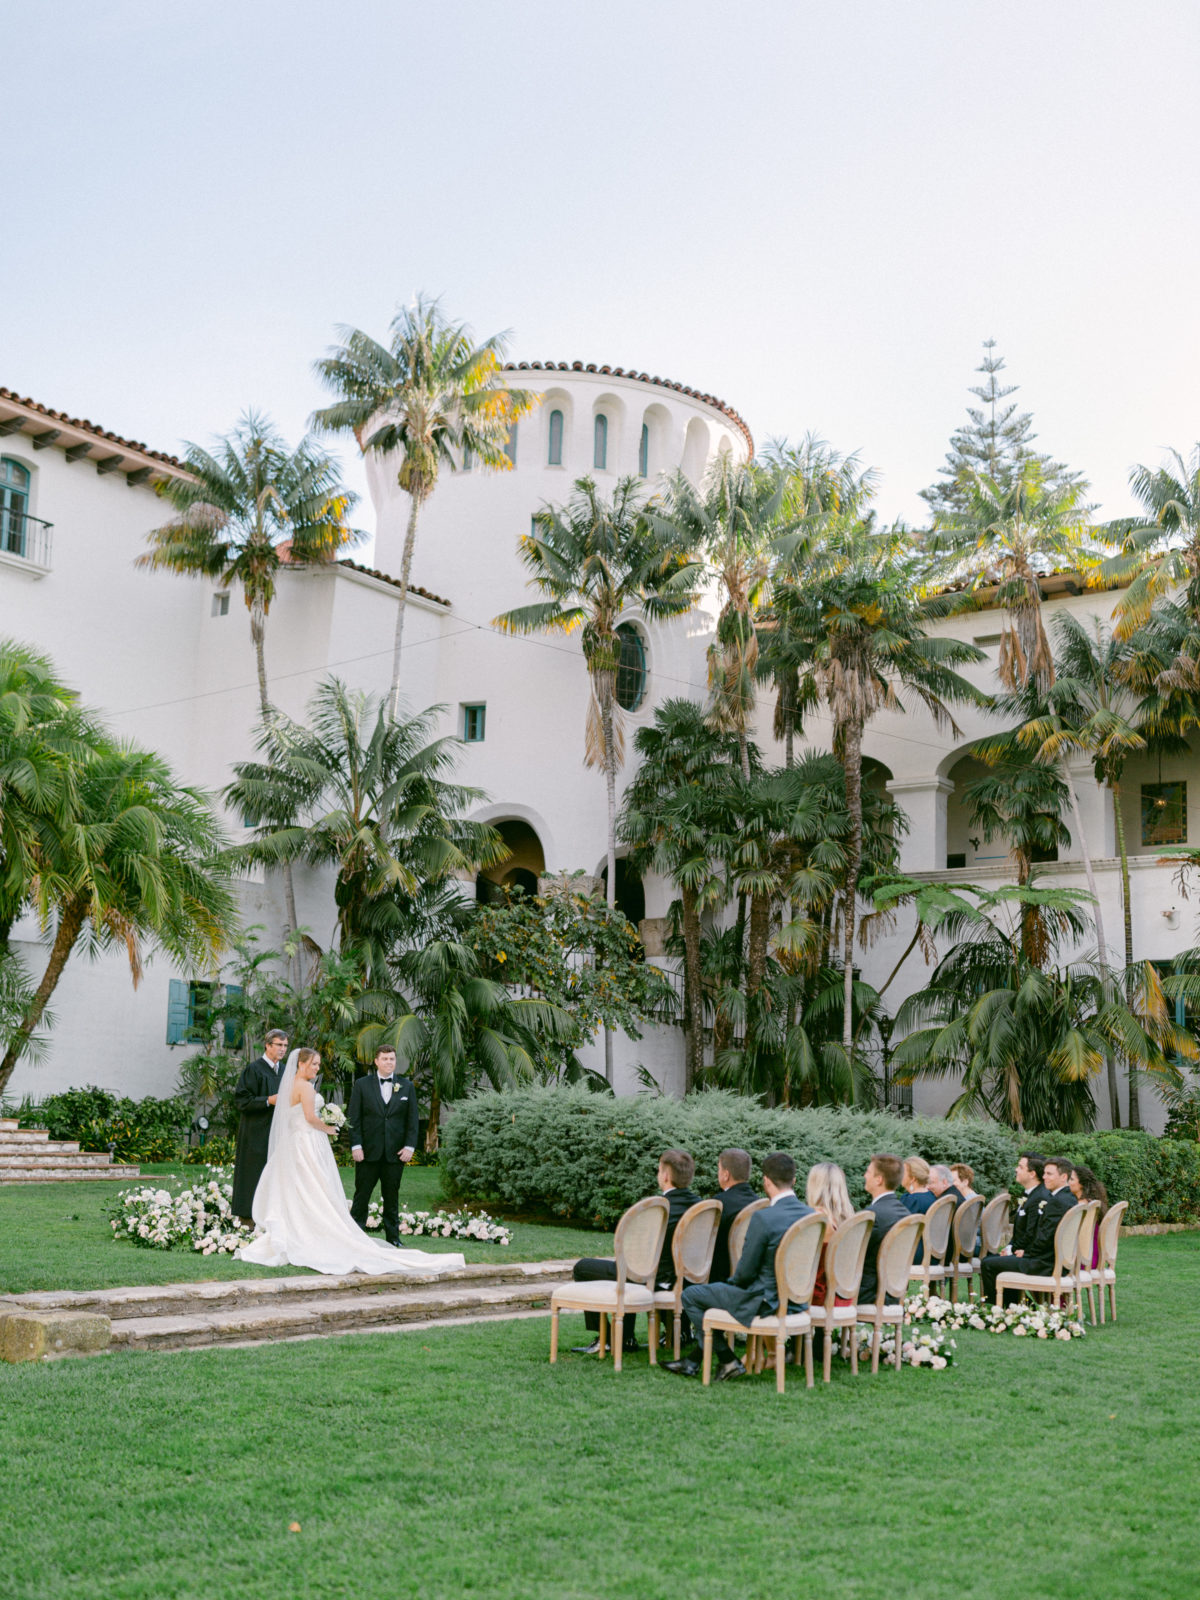 Santa Barbara Courthouse wedding